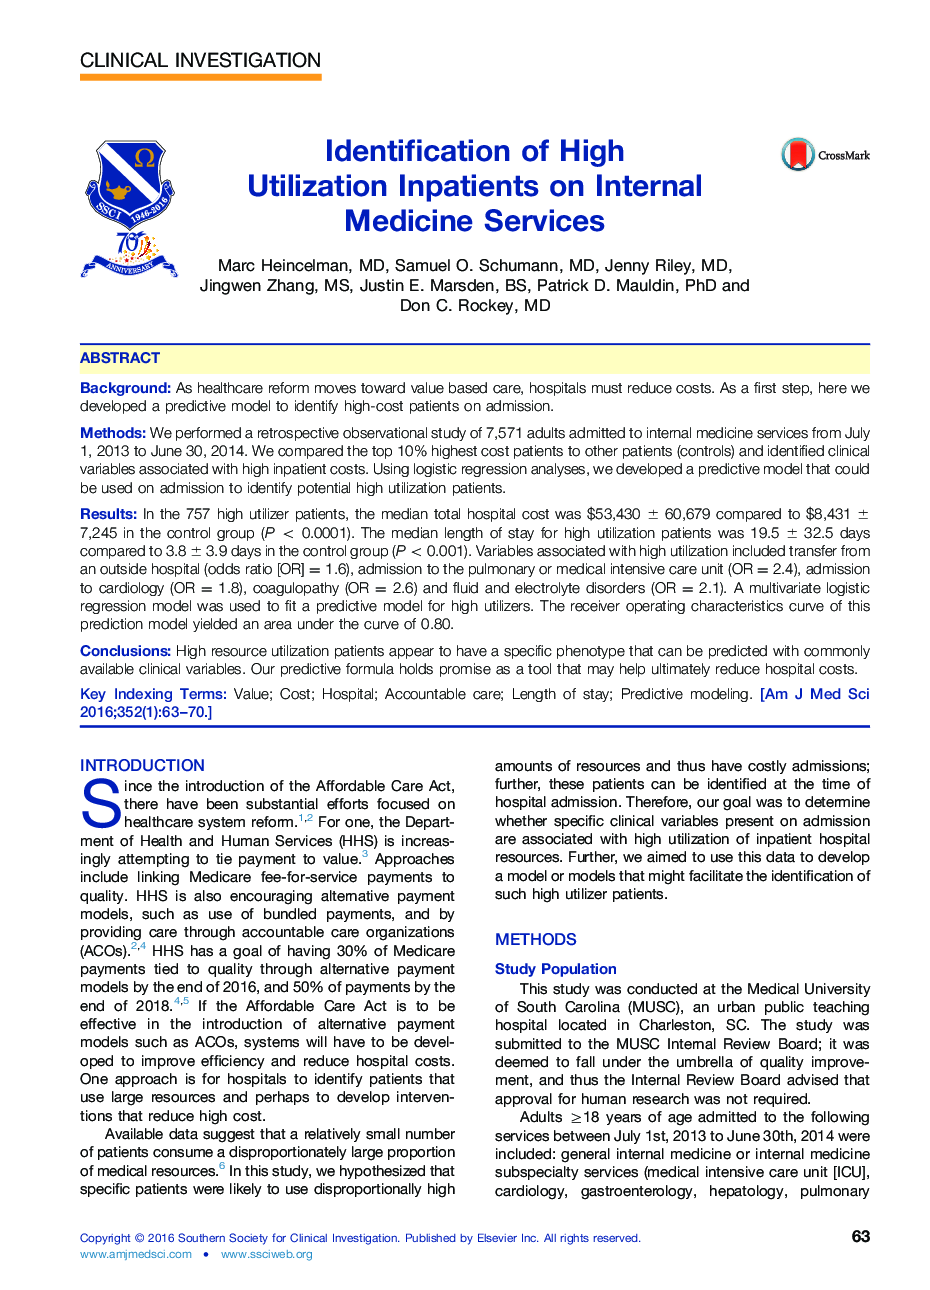 Identification of High Utilization Inpatients on Internal Medicine Services 